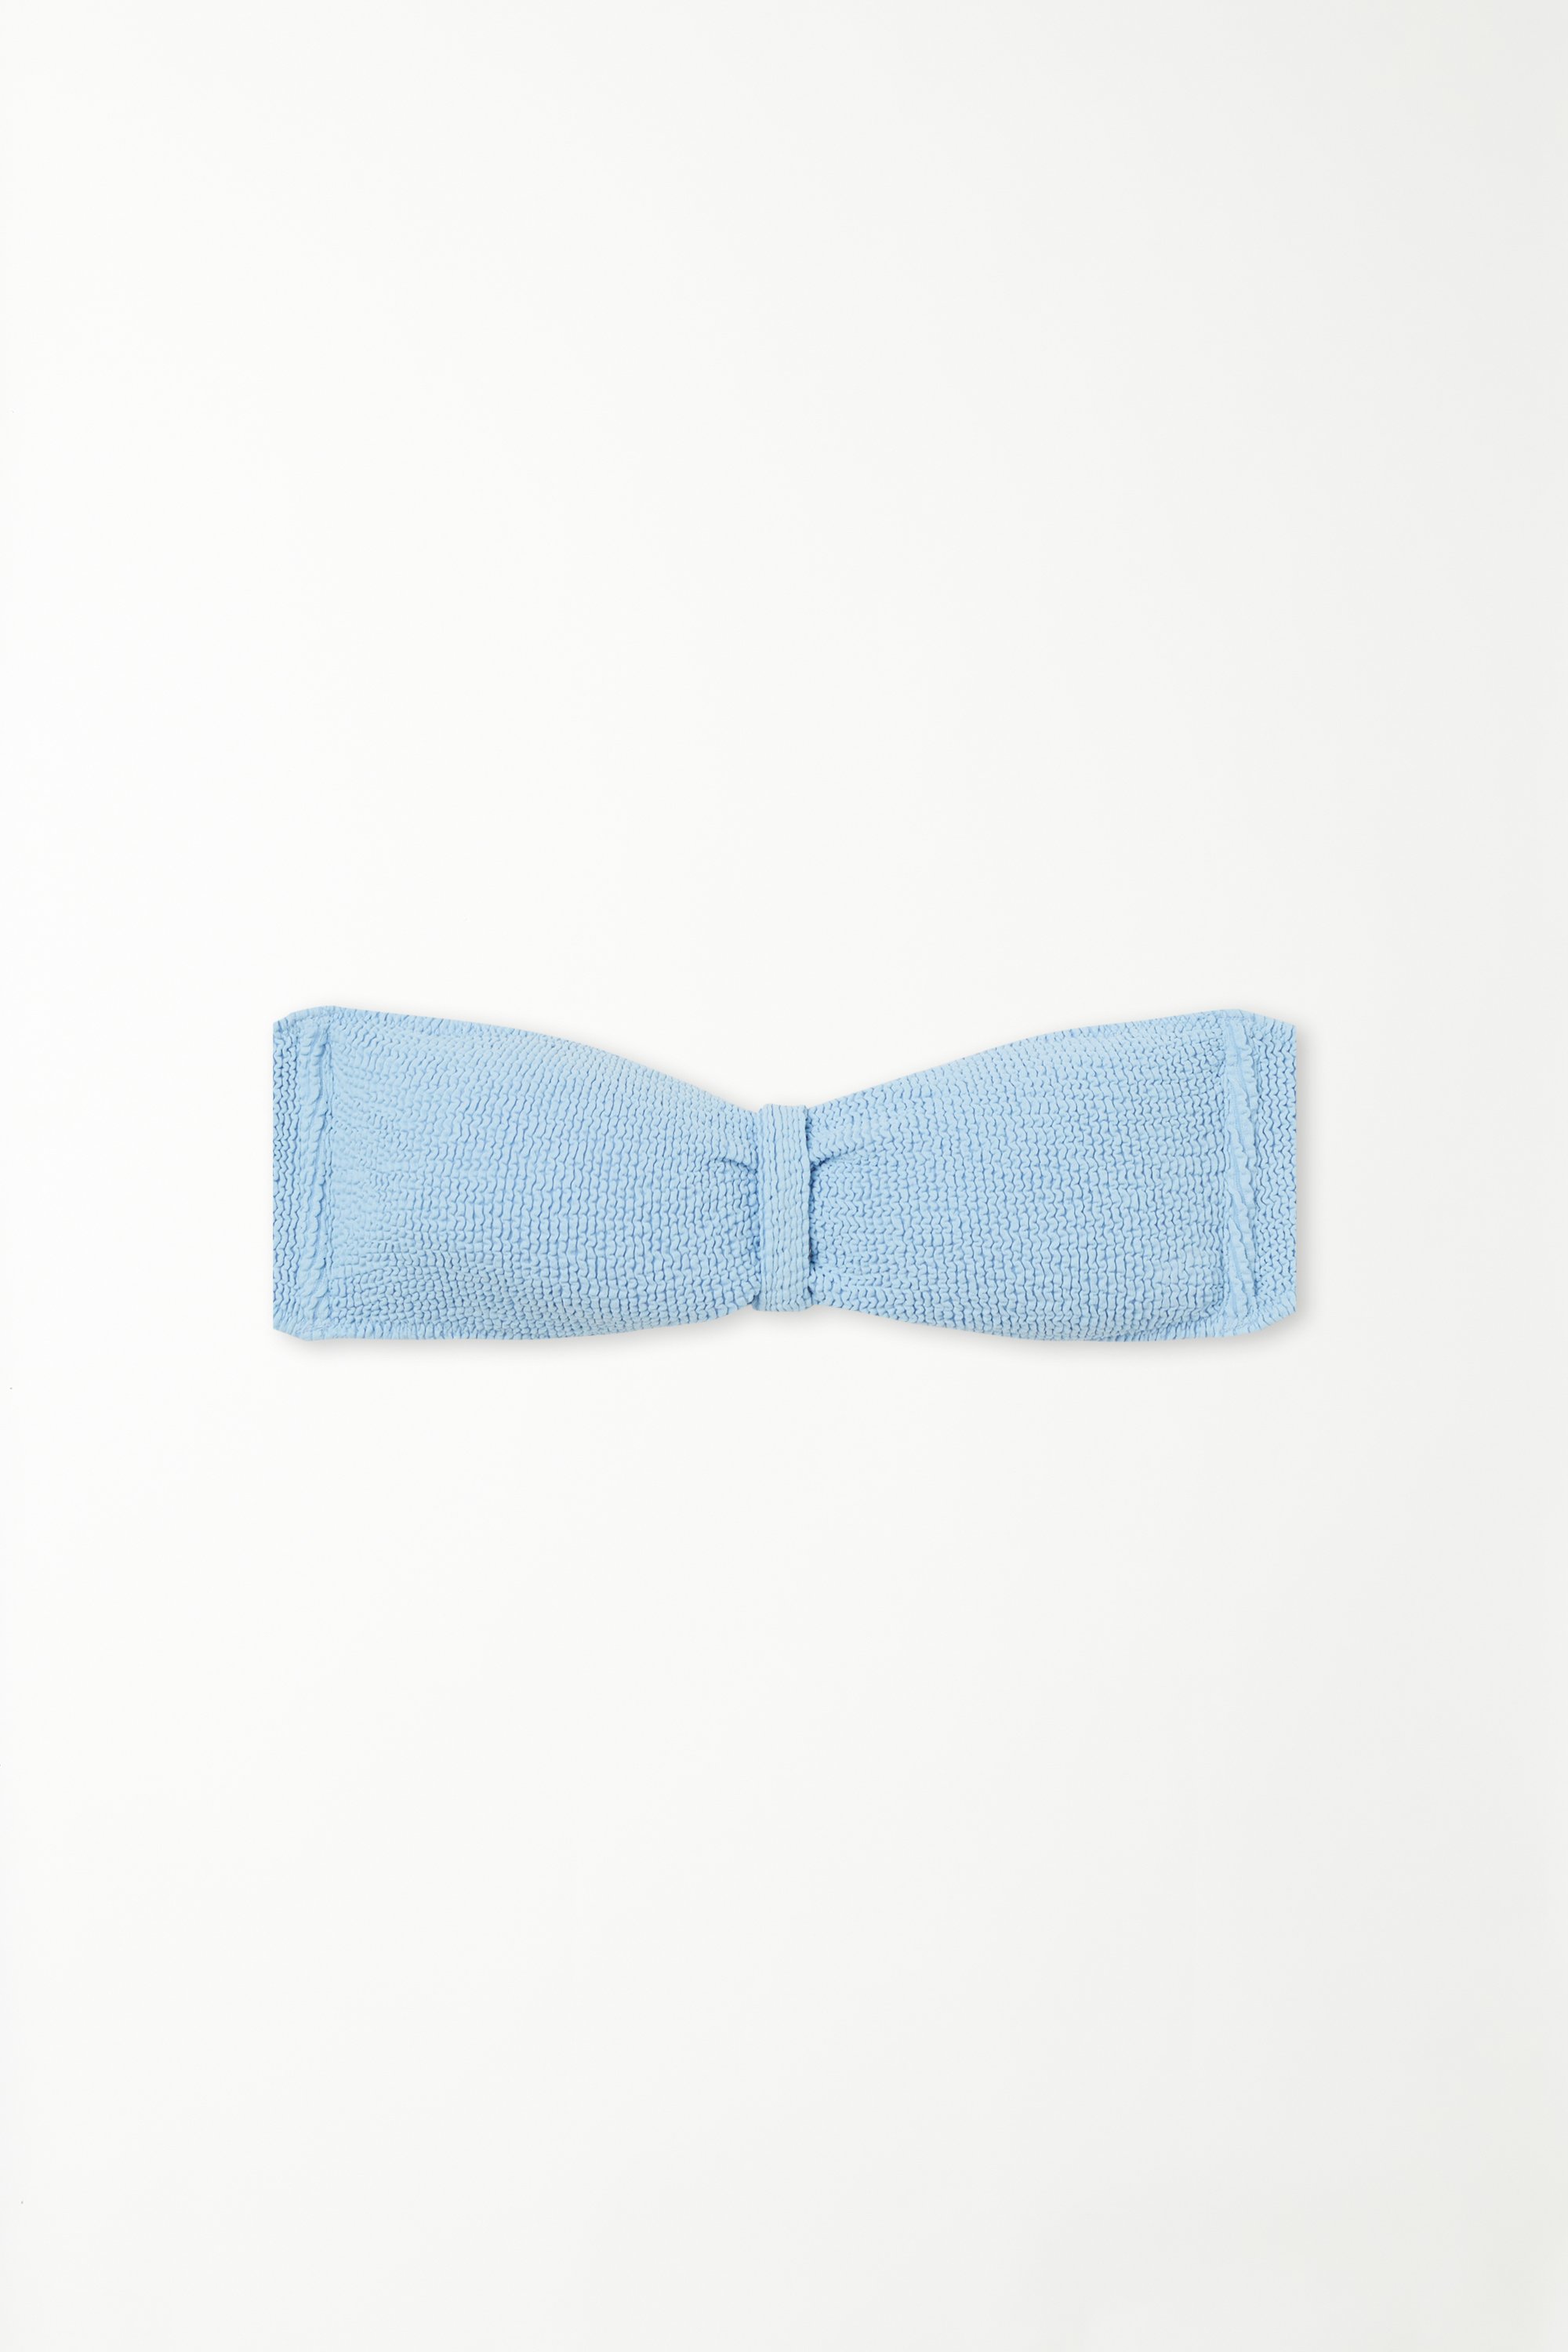 Wavy Light Blue Knot Bandeau Bikini Top with Removable Padding